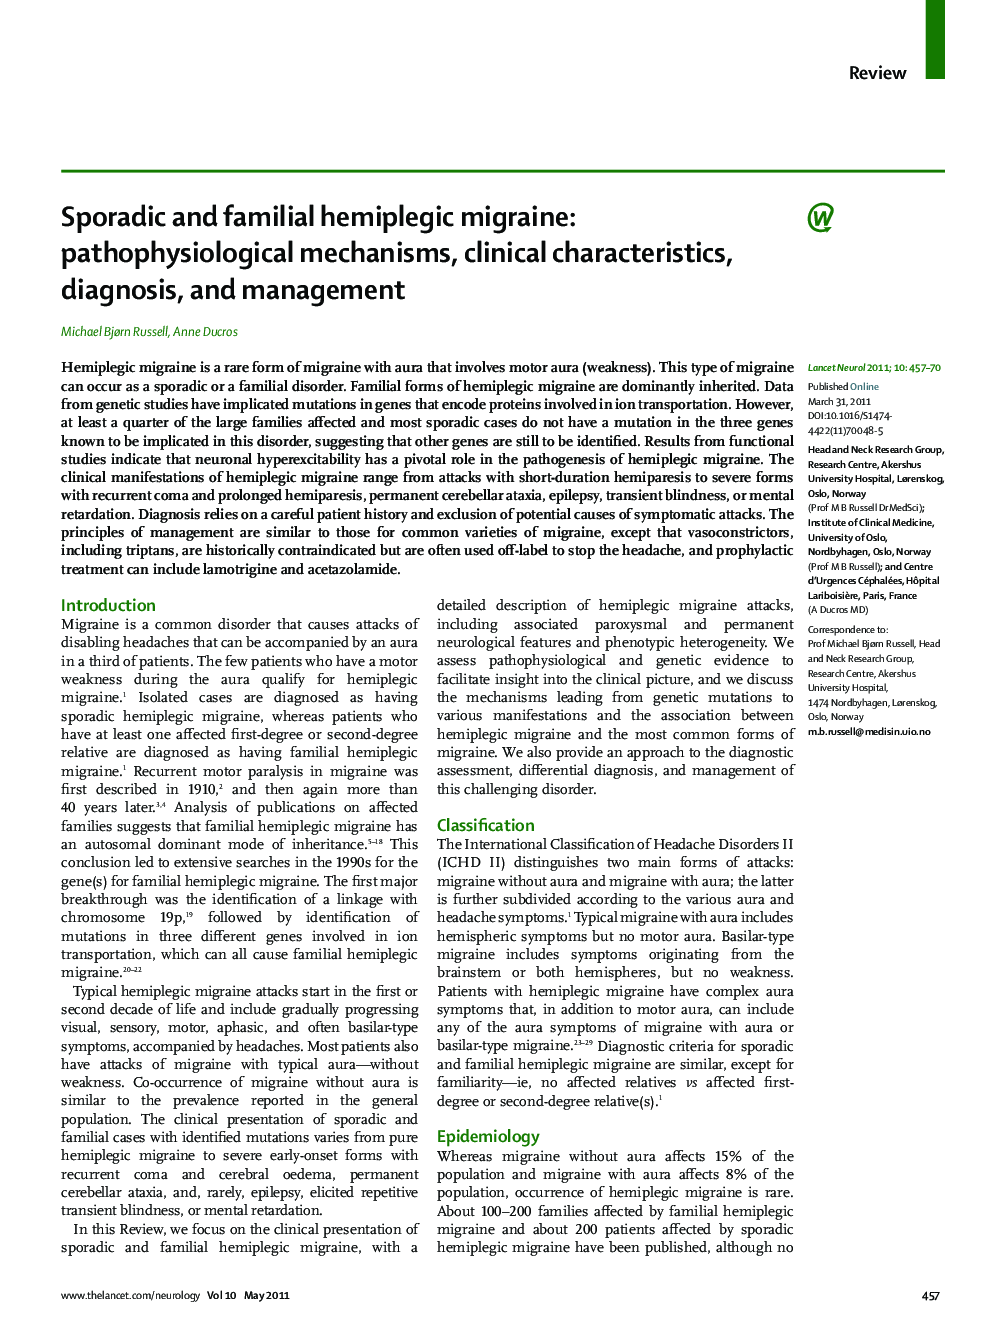 Sporadic and familial hemiplegic migraine: pathophysiological mechanisms, clinical characteristics, diagnosis, and management